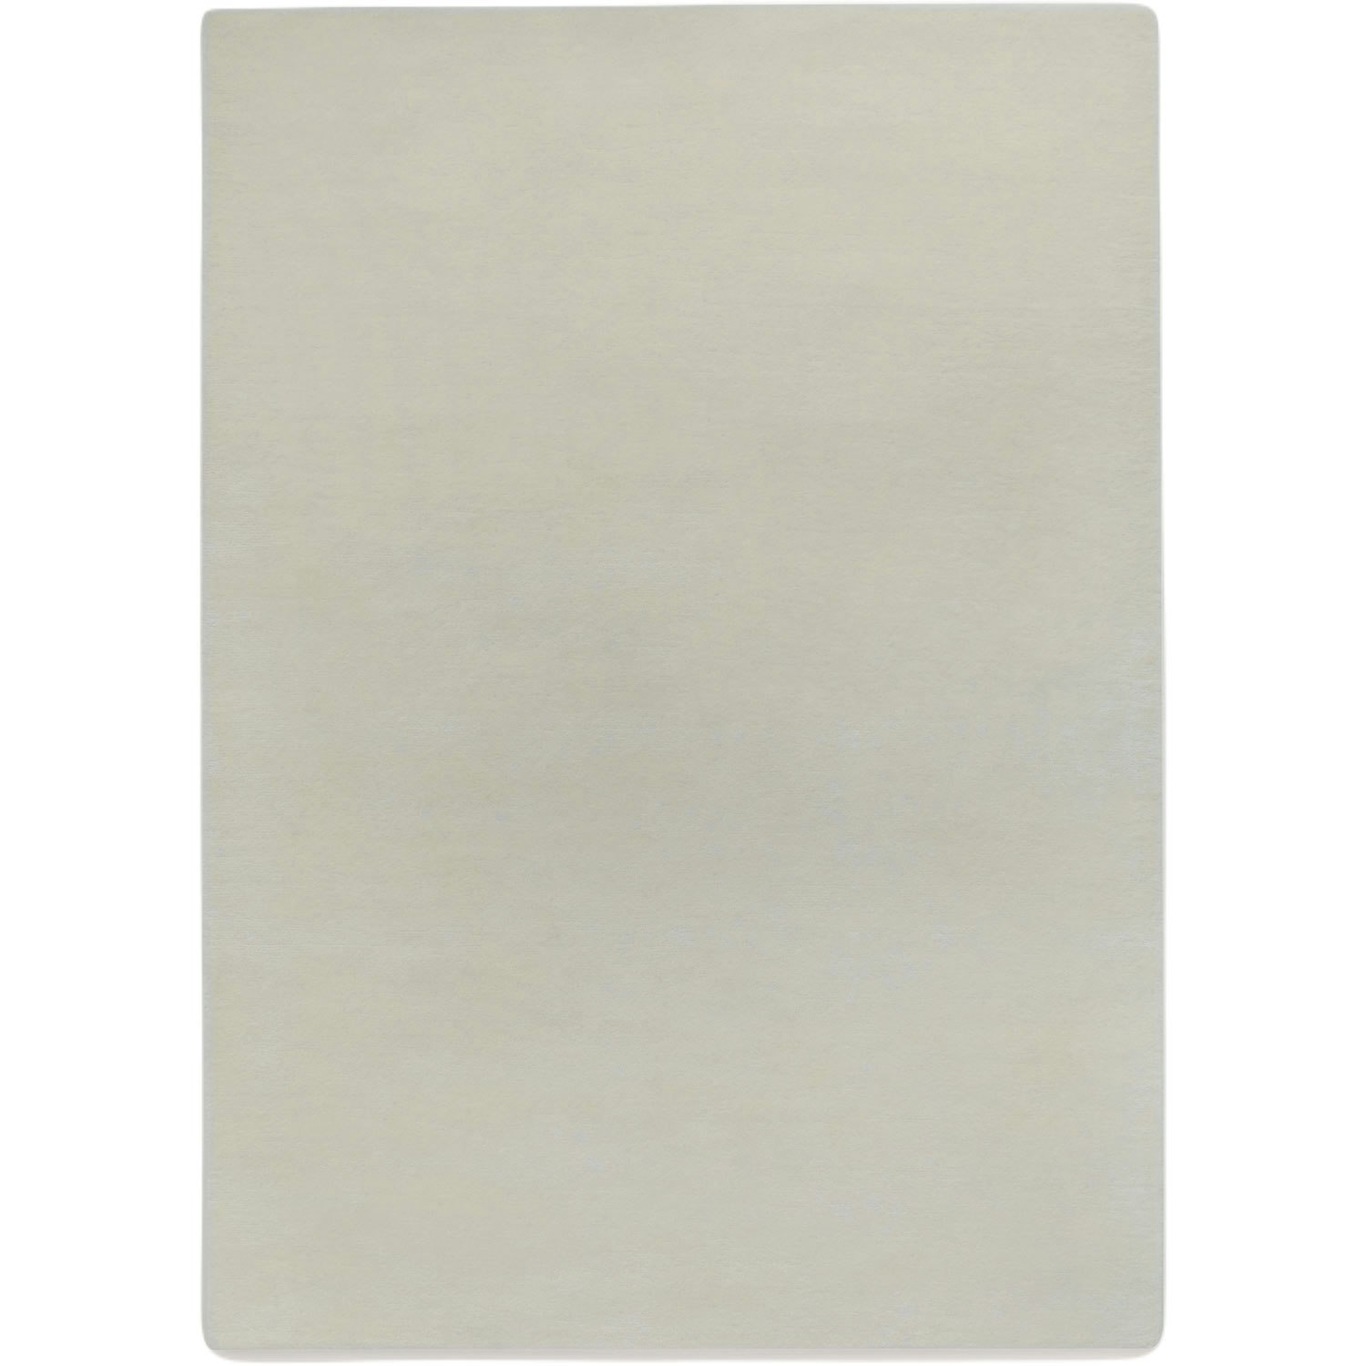 Liljehok Wollen Vloerkleed Gebroken Wit, 170x240 cm